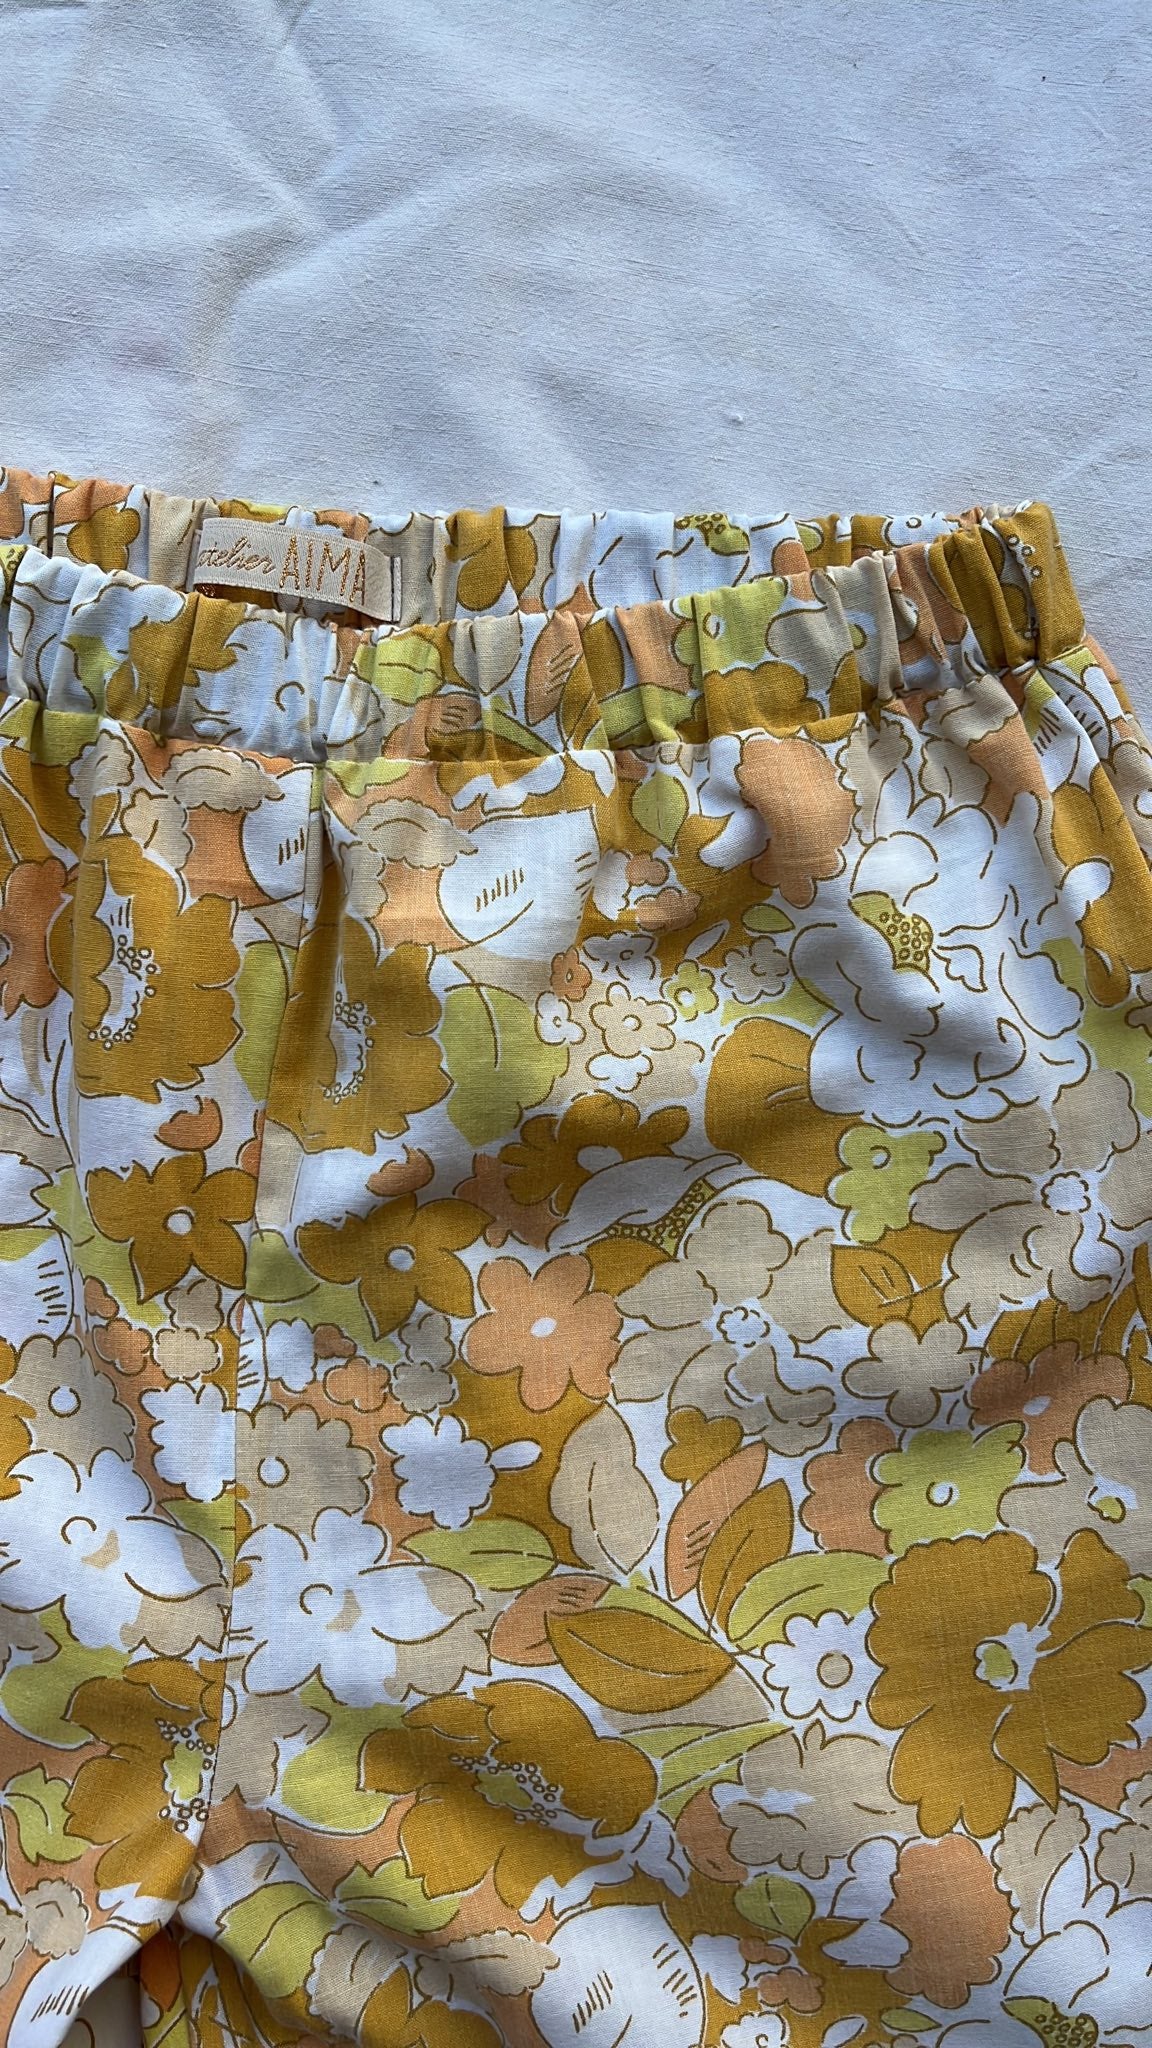 Pantalon fleurs jaunes